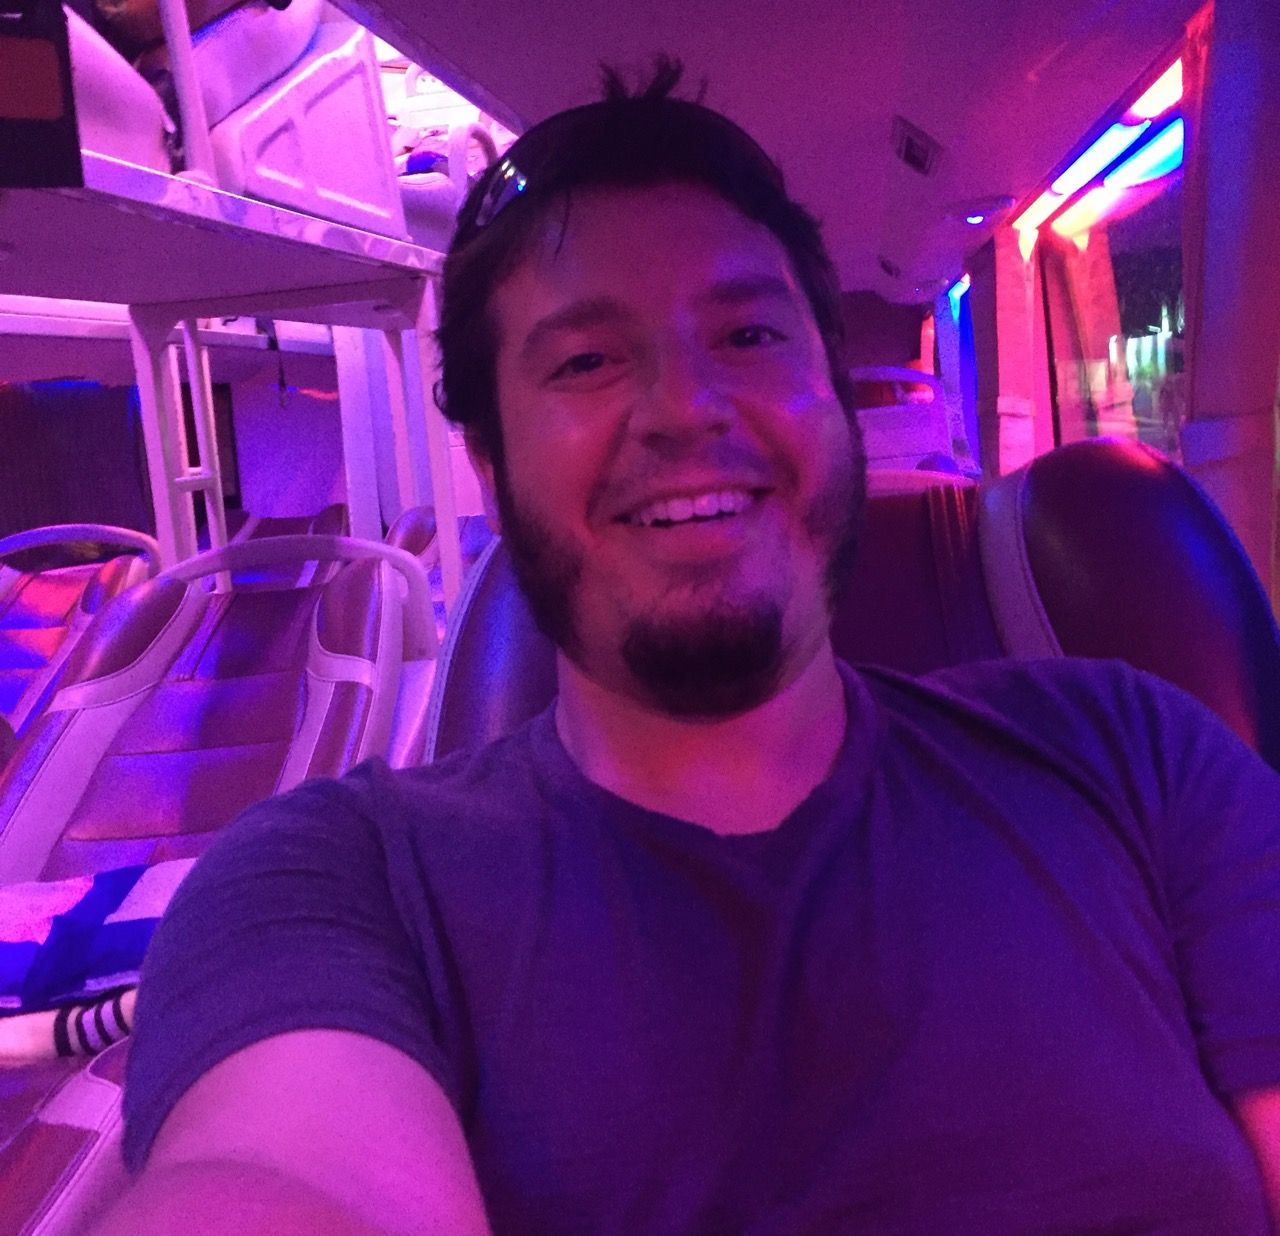 Man smiling inside a lit up night bus.